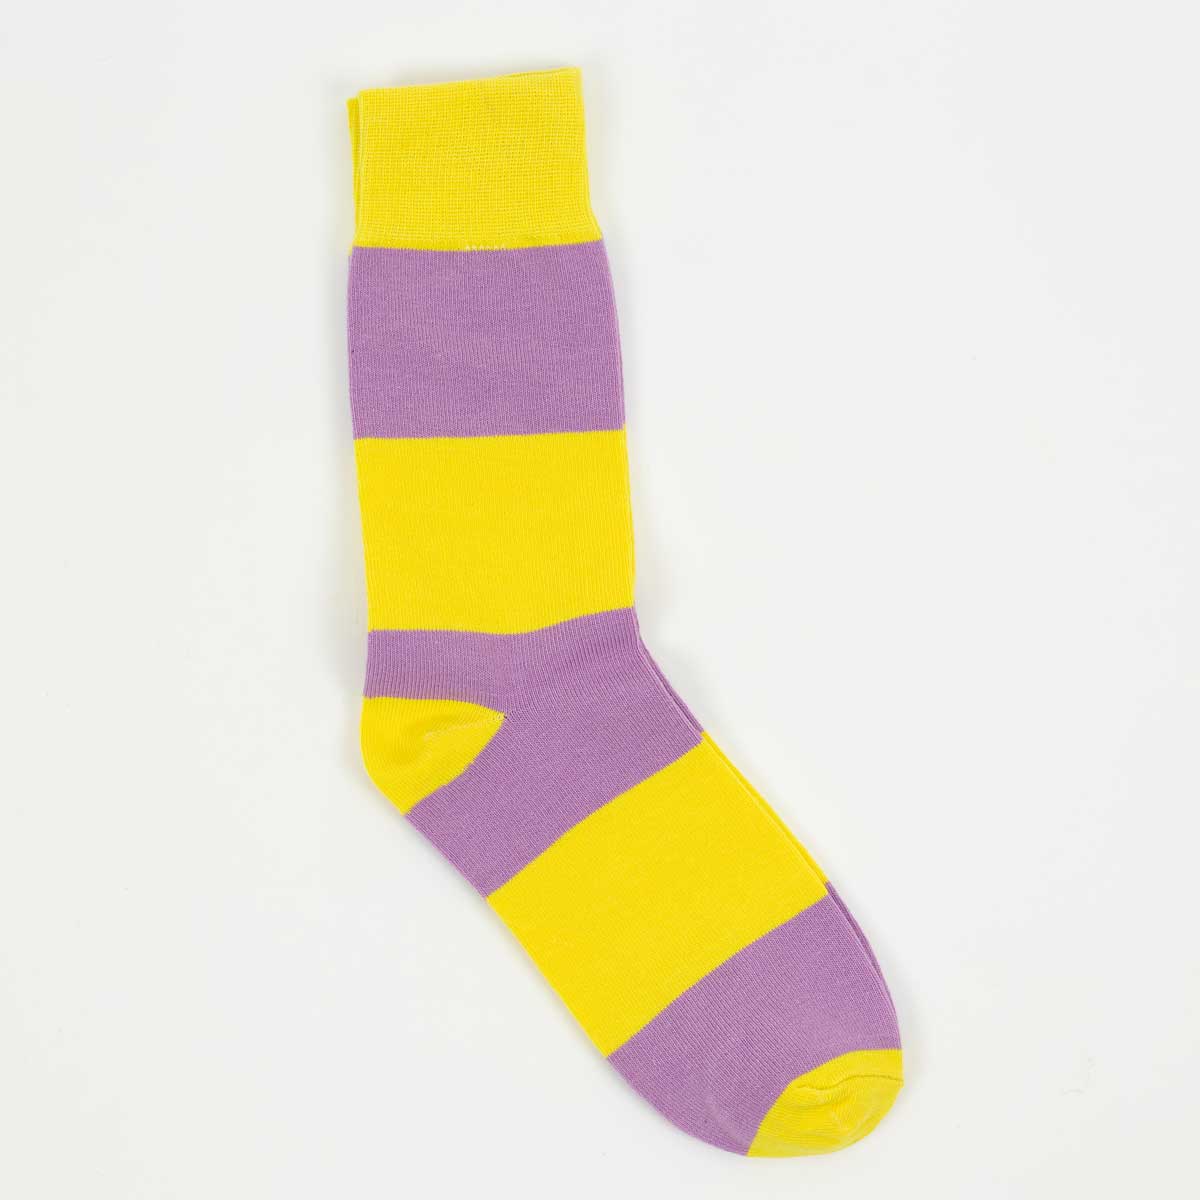 AWOC Socks, yellow/lilac